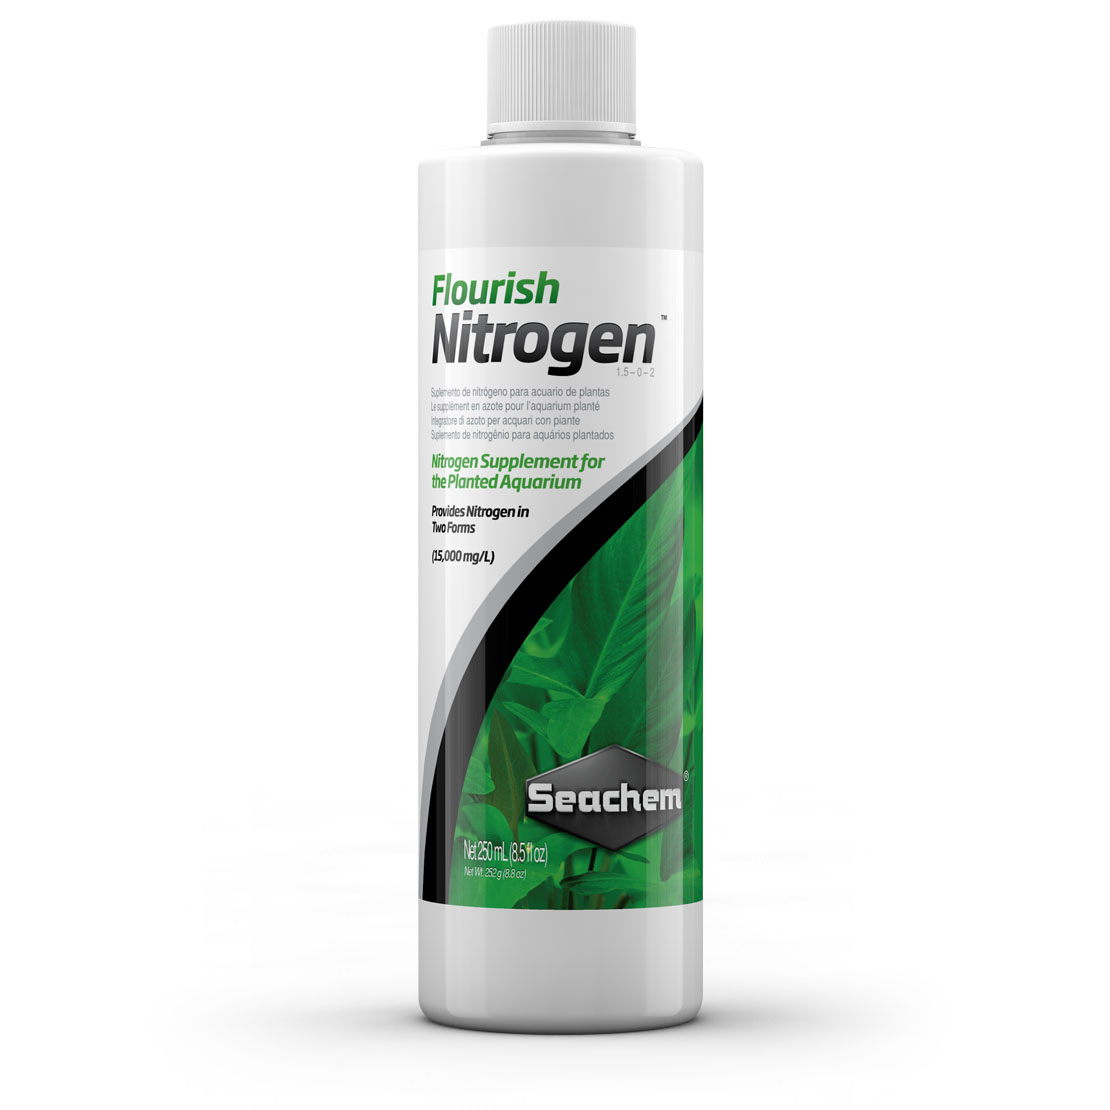 Seacheam Flourish Nitrogen supplement